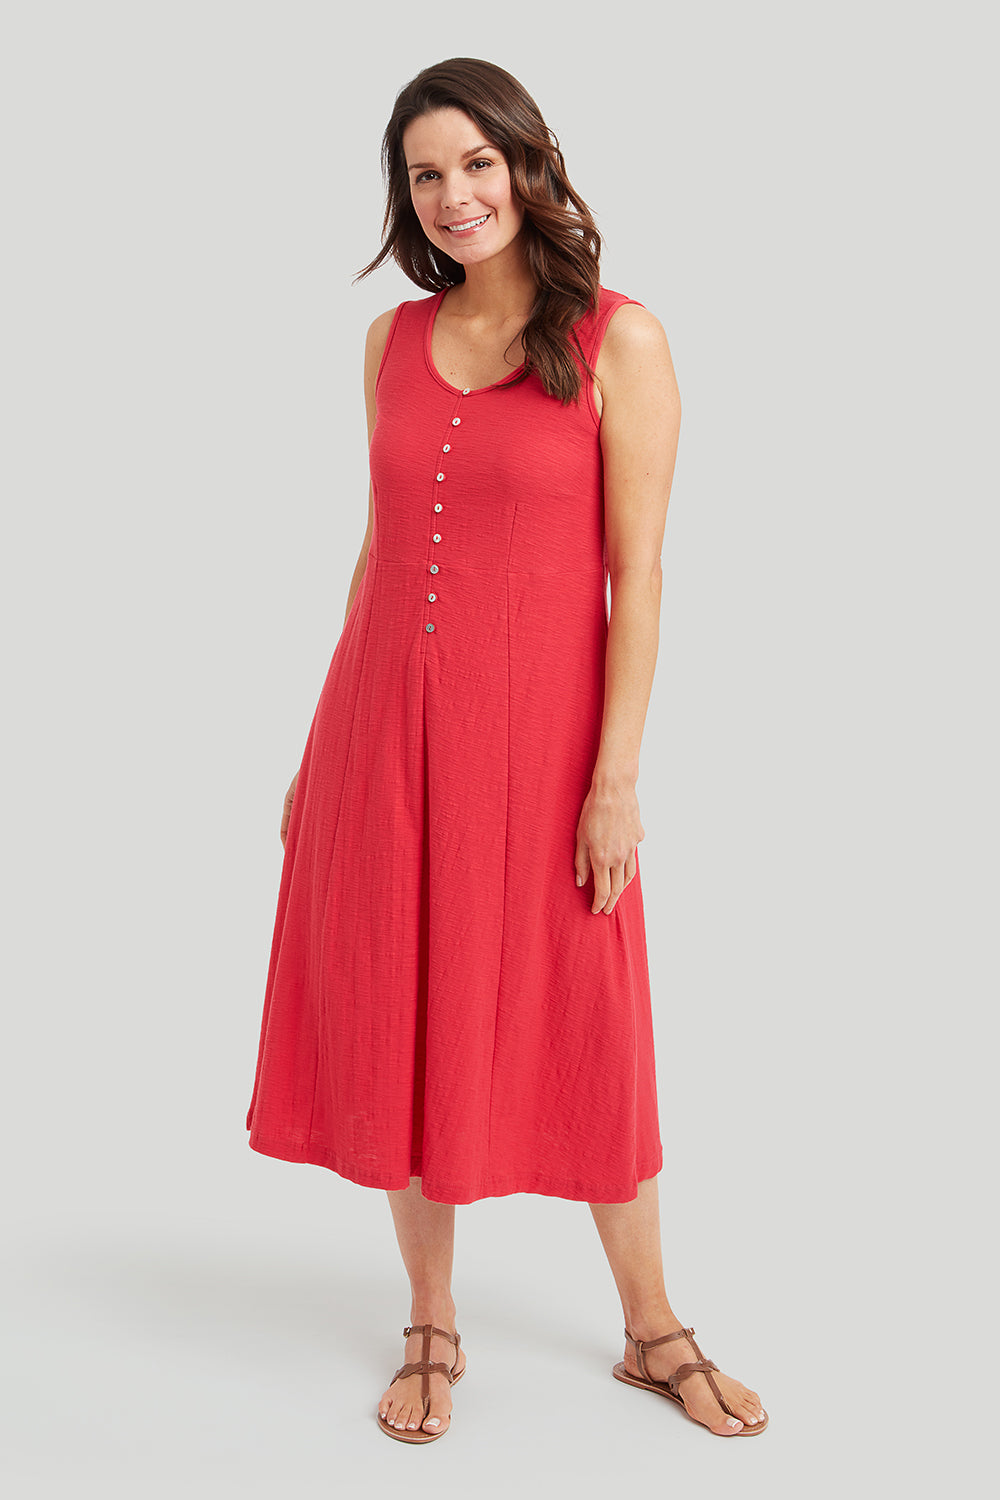 Adini Lutari Organic Solid Dress - Red